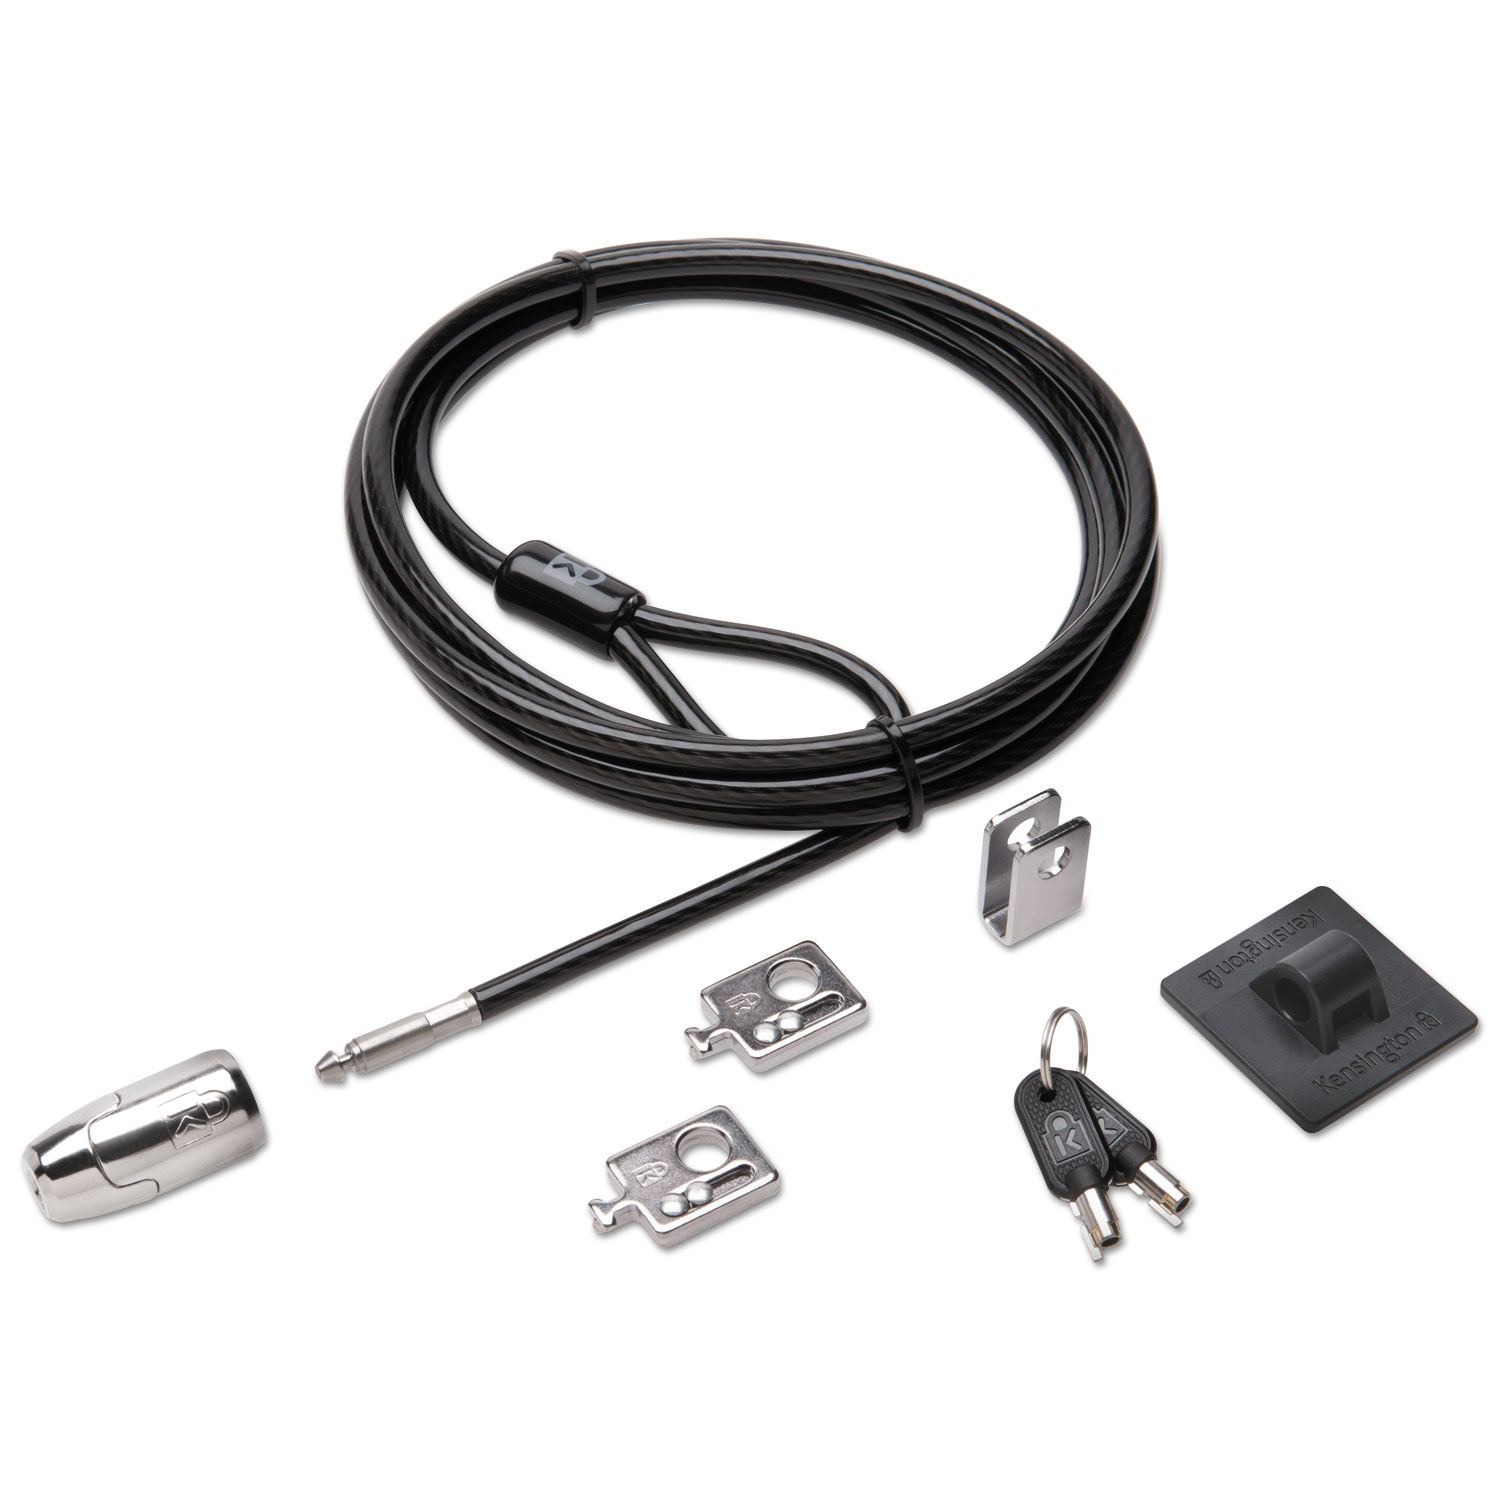  Kensington K64424WW Desktop and Peripherals Locking Kit 2.0, 8ft Carbon Steel Cable (KMW64424) 